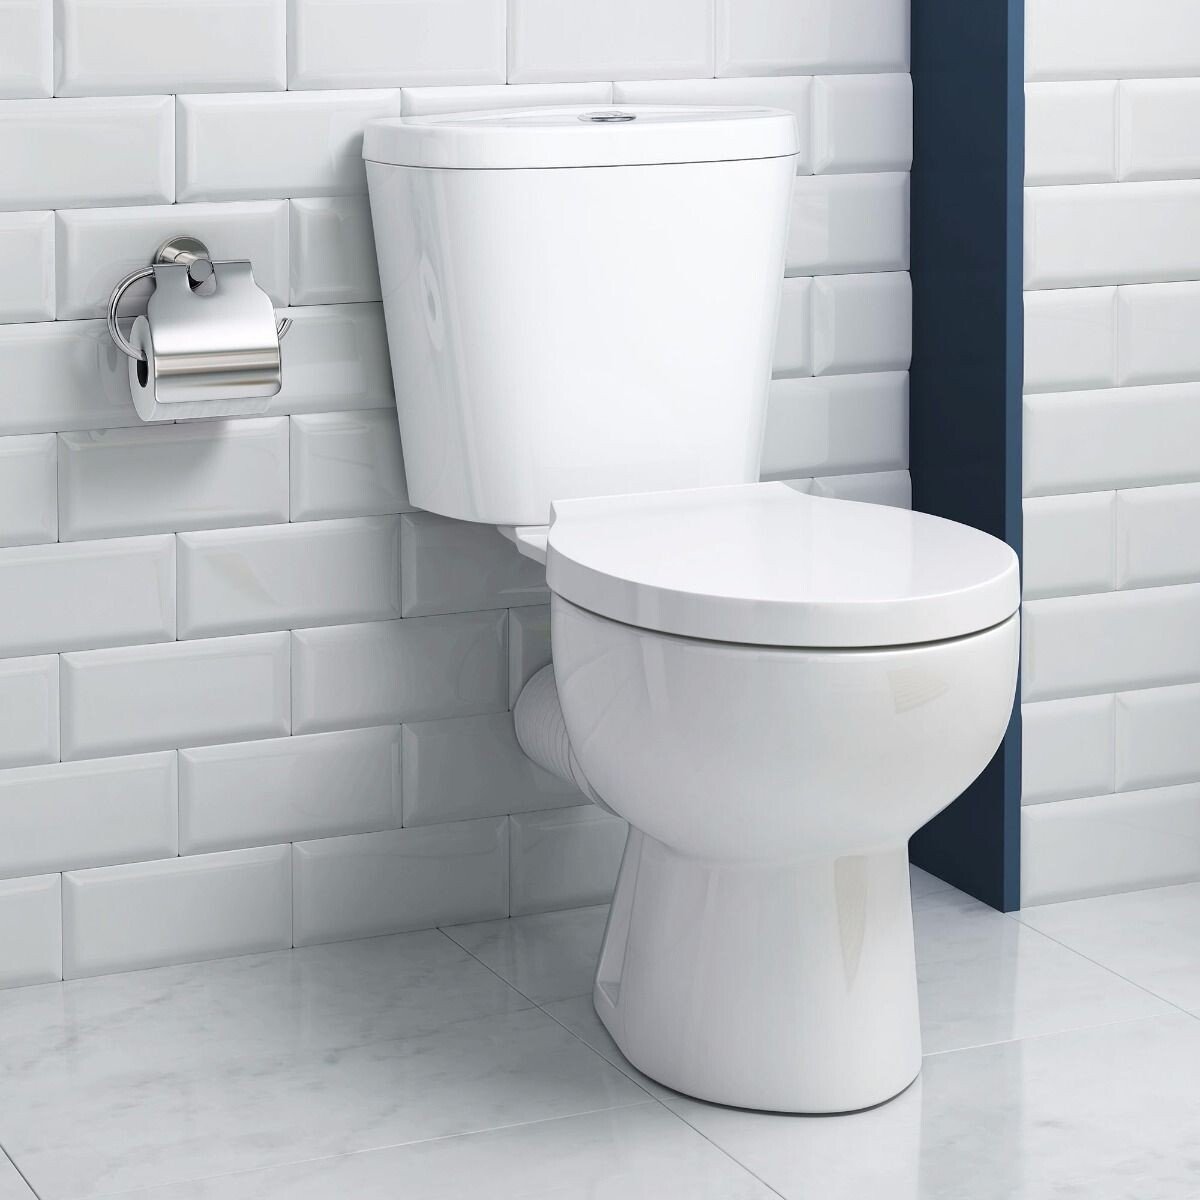 staand-toilet-wit